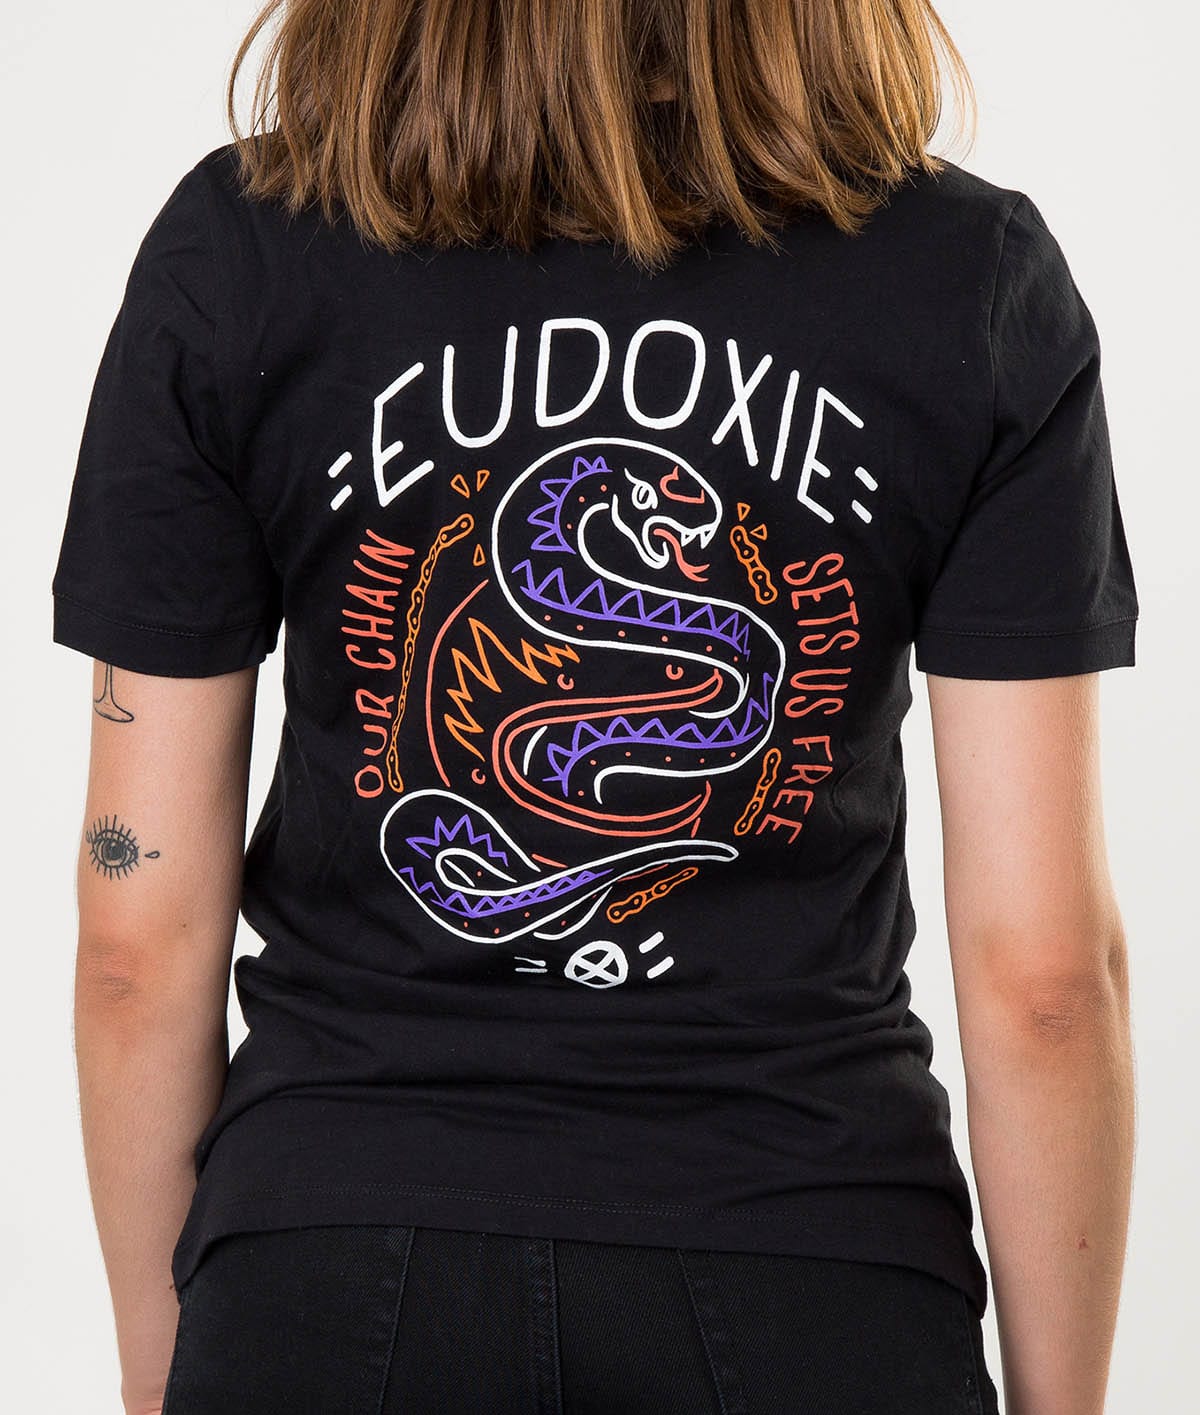 Eudoxie Black Masha T-Shirt - Small - Bild 1